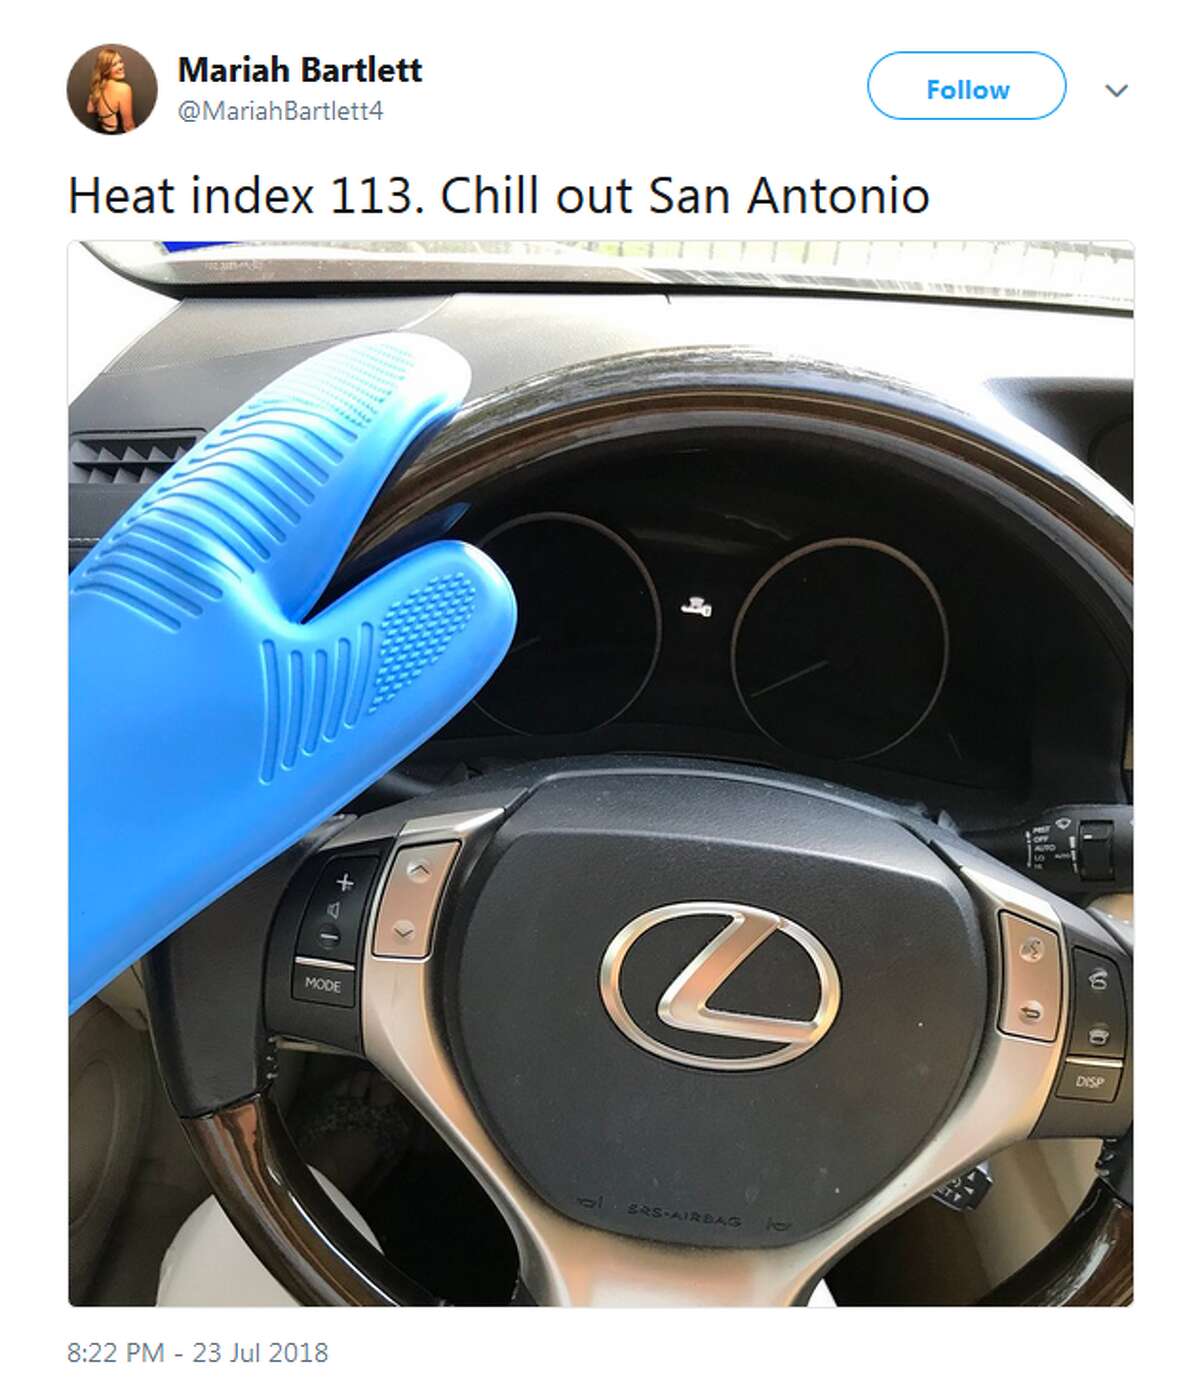 @MariahBartlett4: Heat index 113. Chill out San Antonio